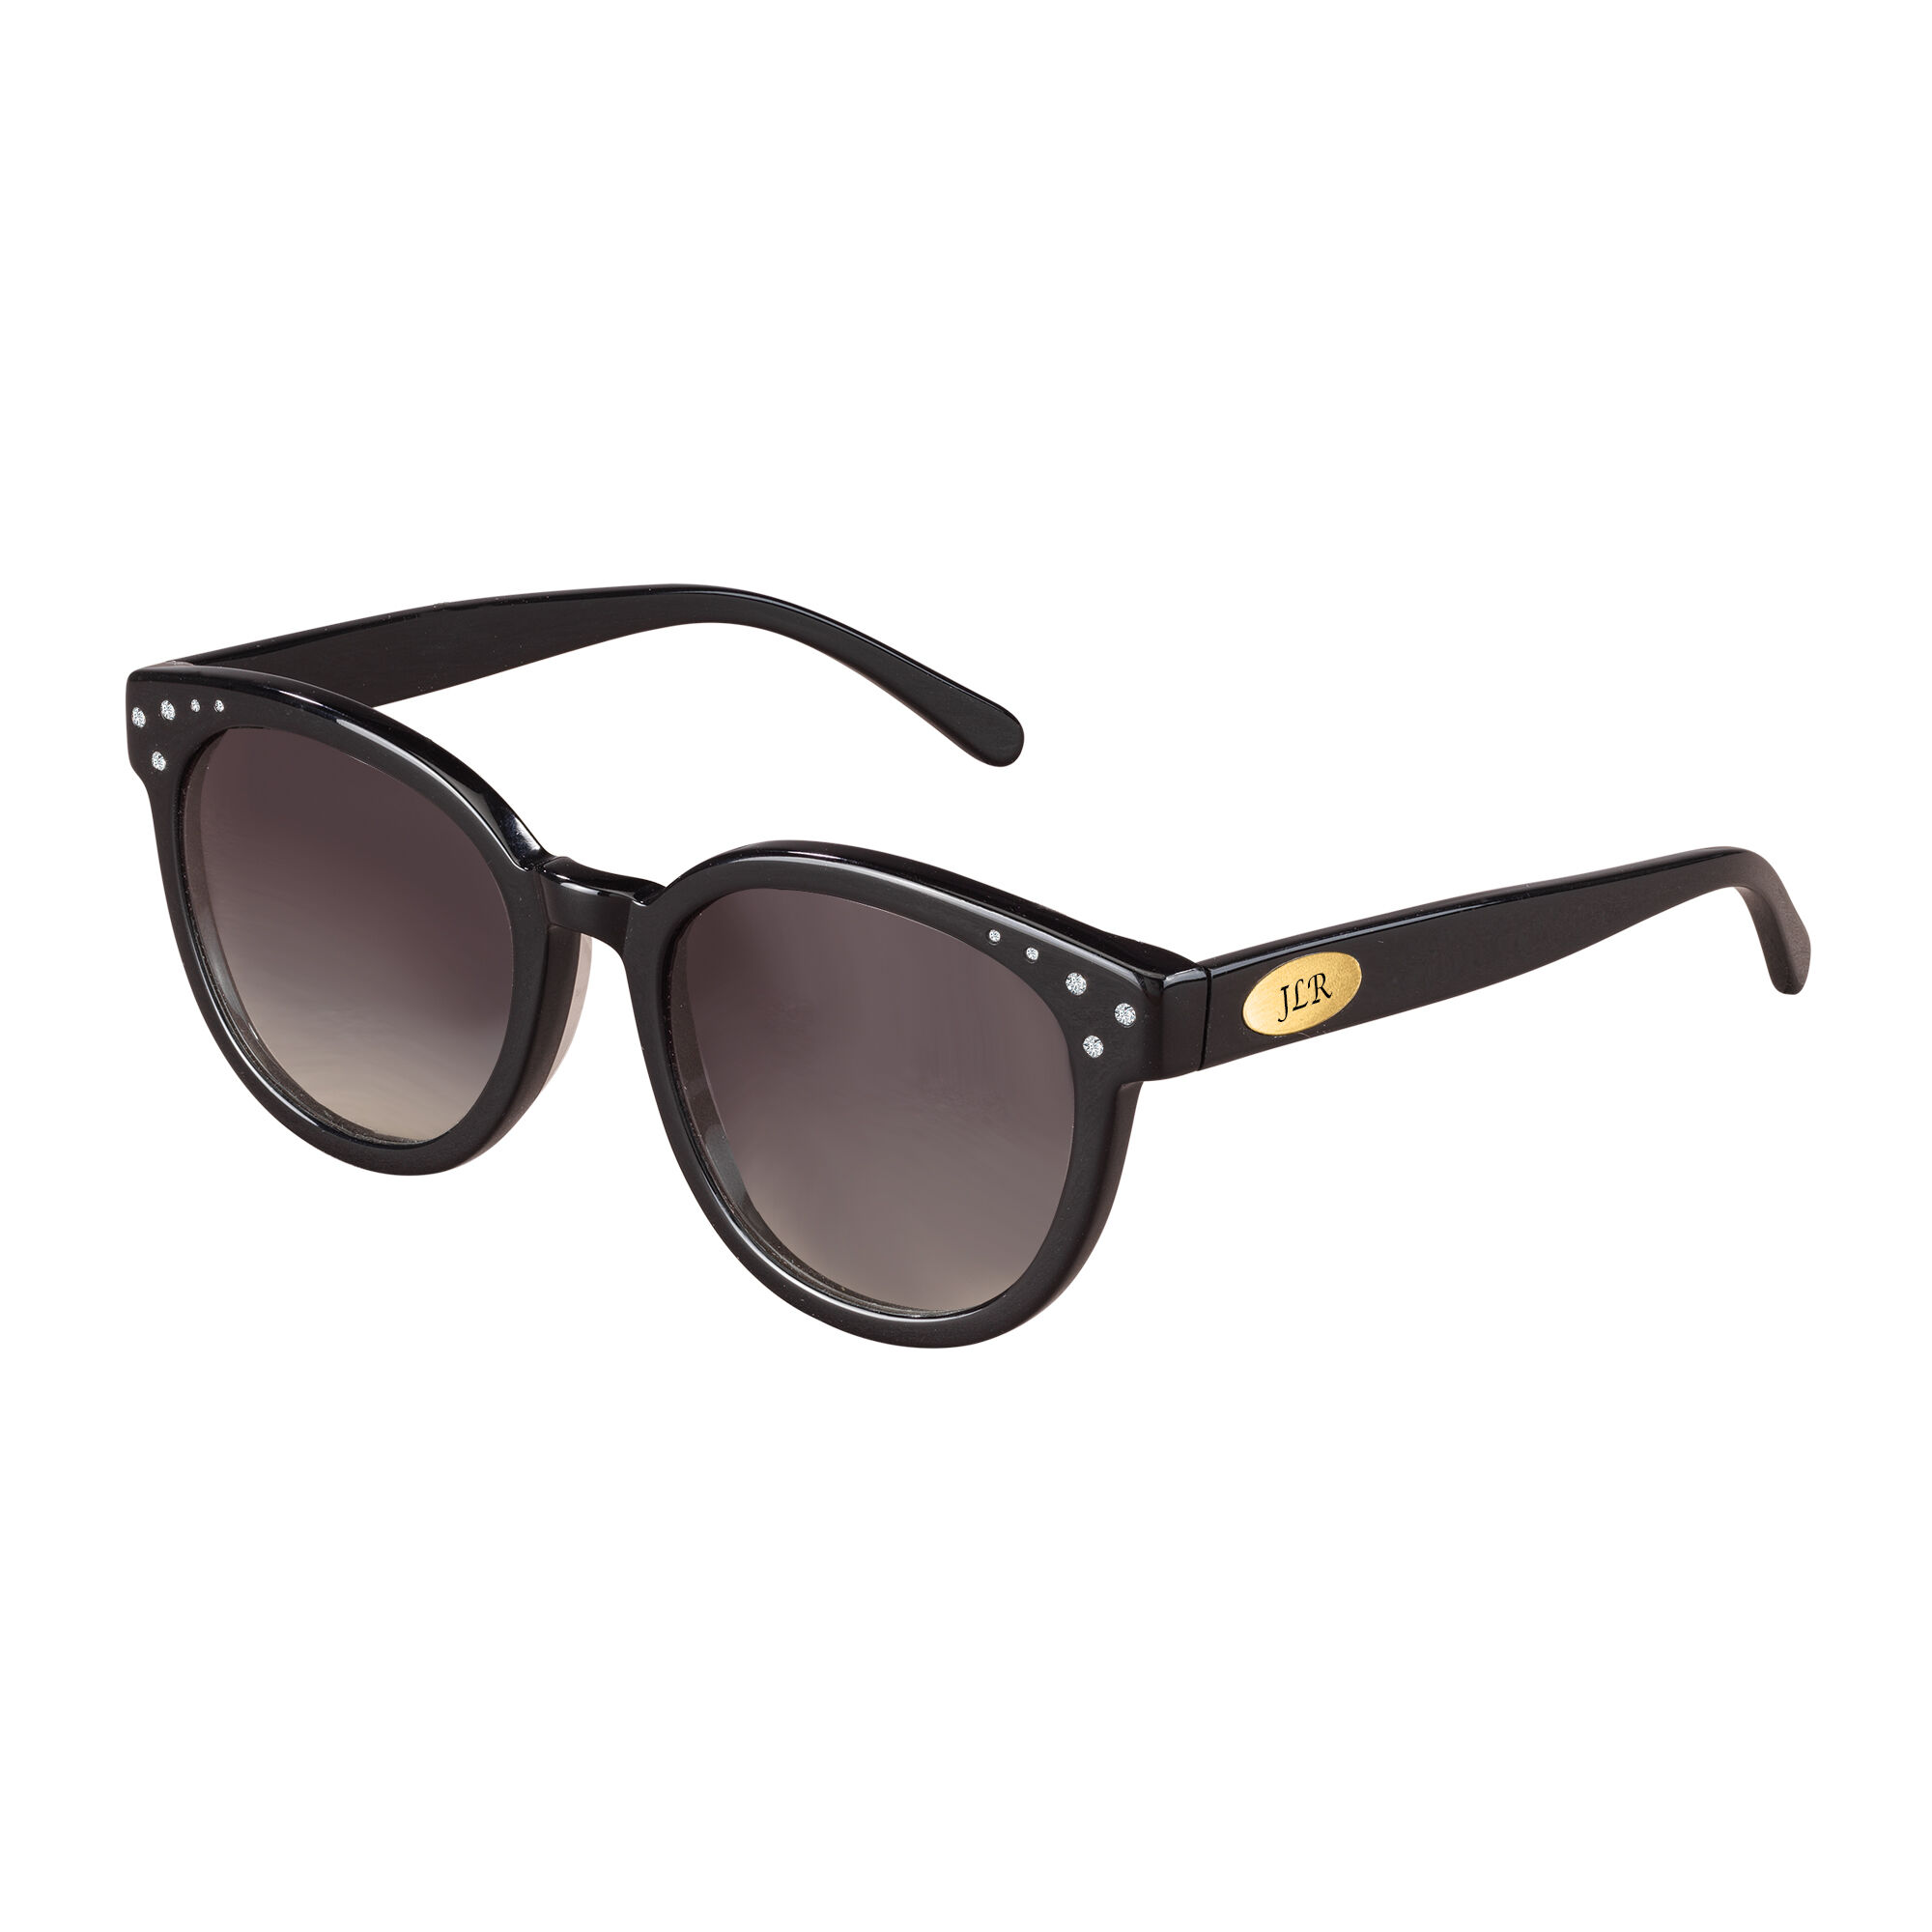 Personalized Glam Sunglasses 11298 0016 a main